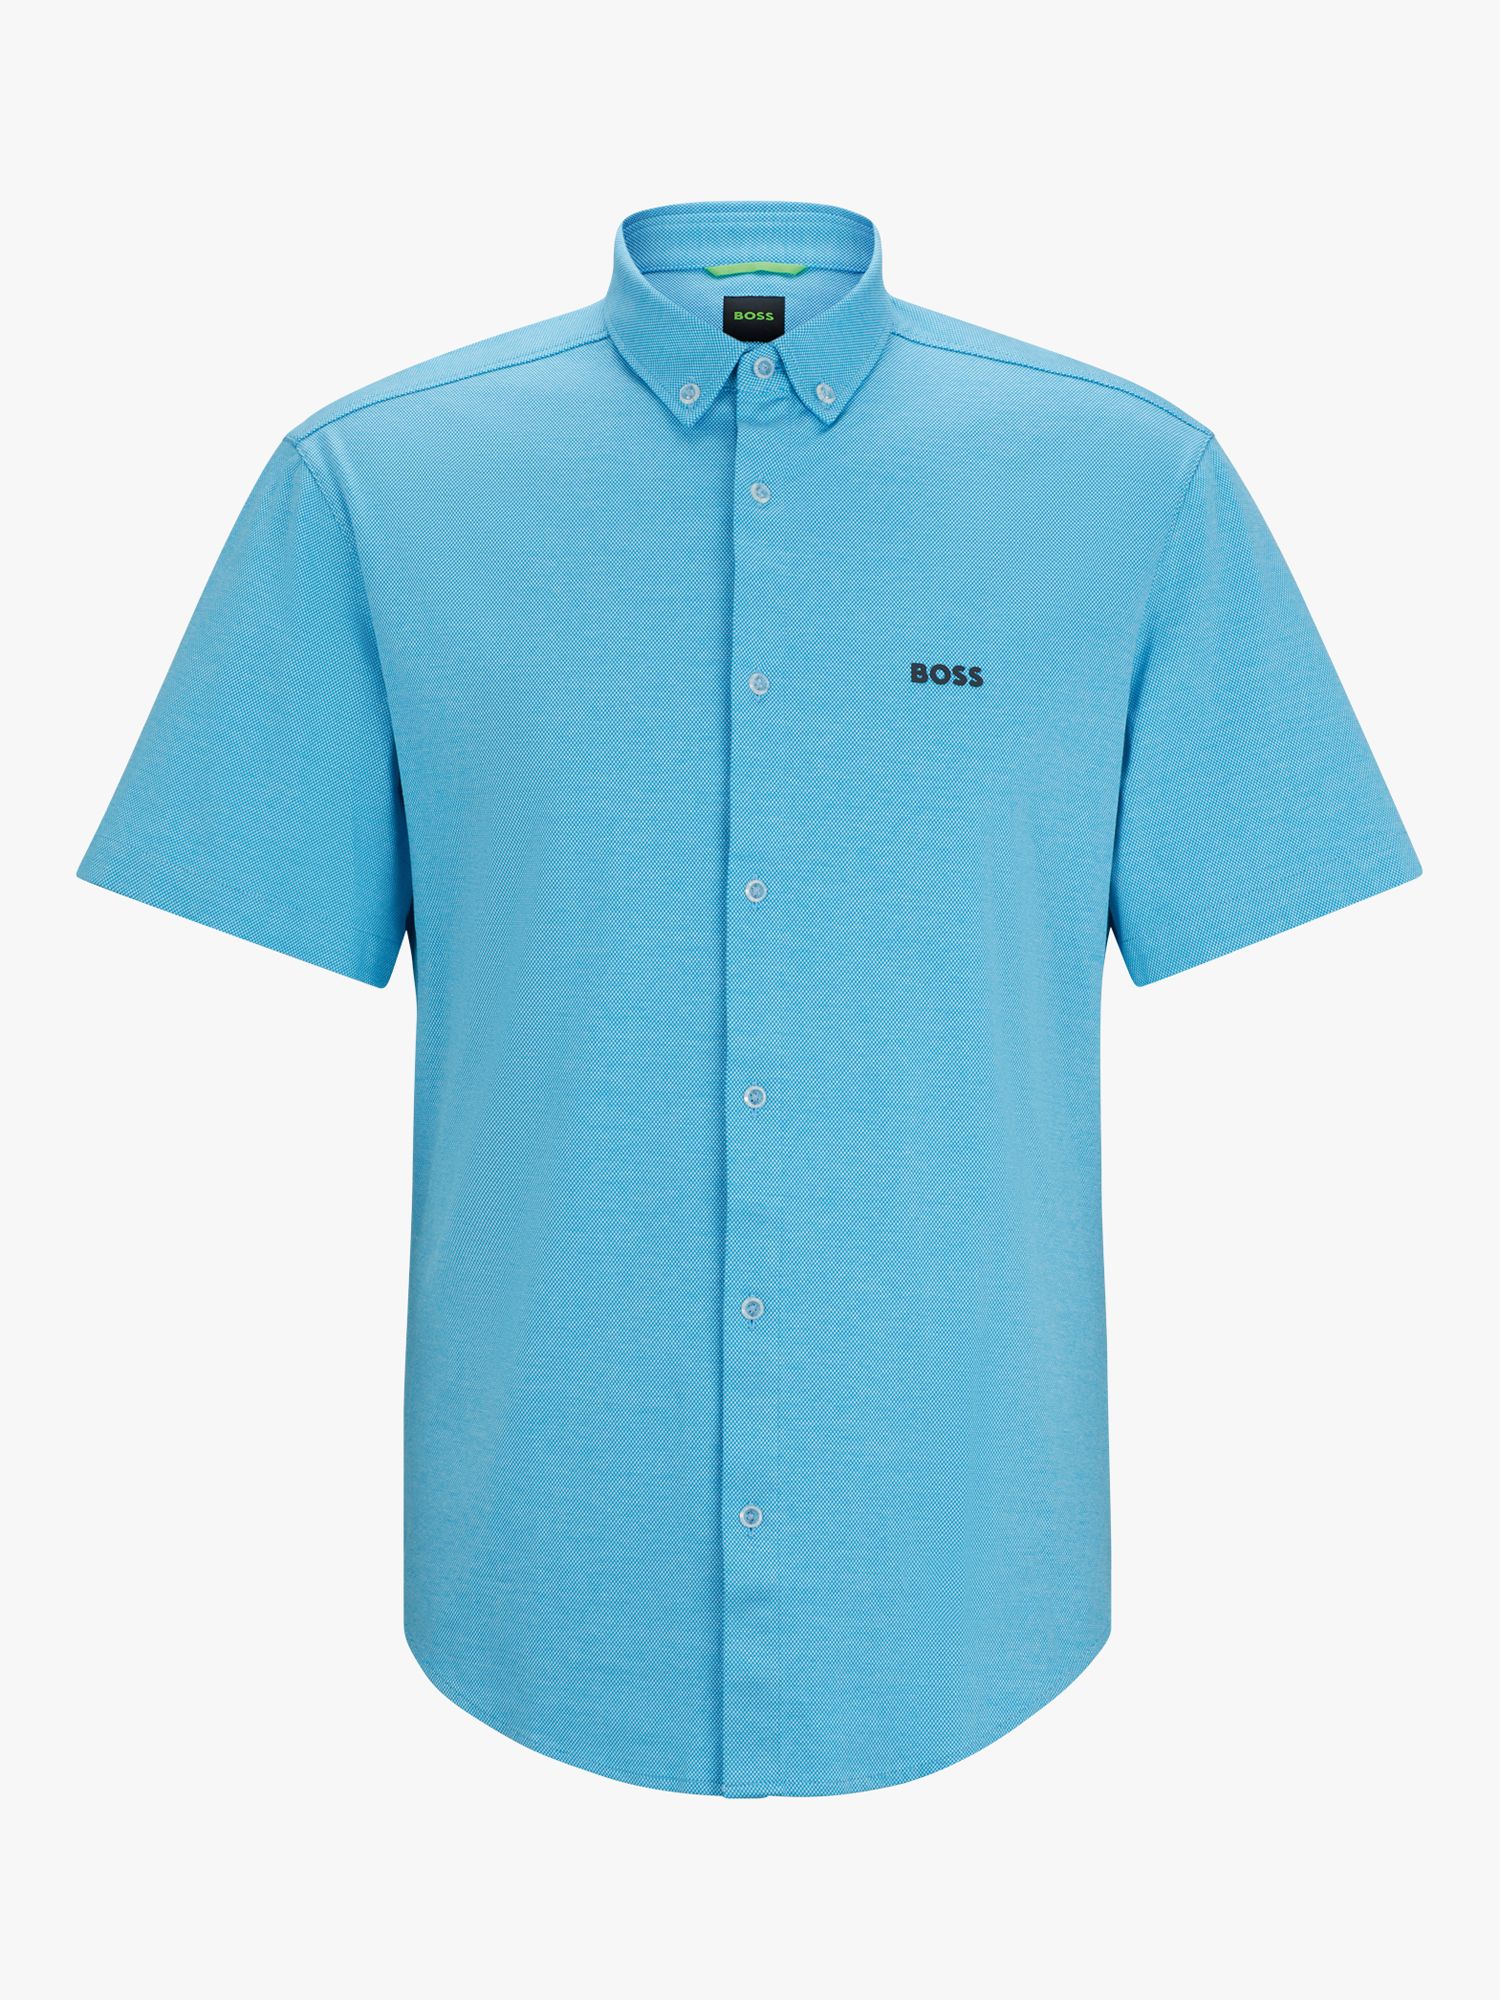 BOSS Motion Short Sleeve Cotton Shirt, Turquoise, M